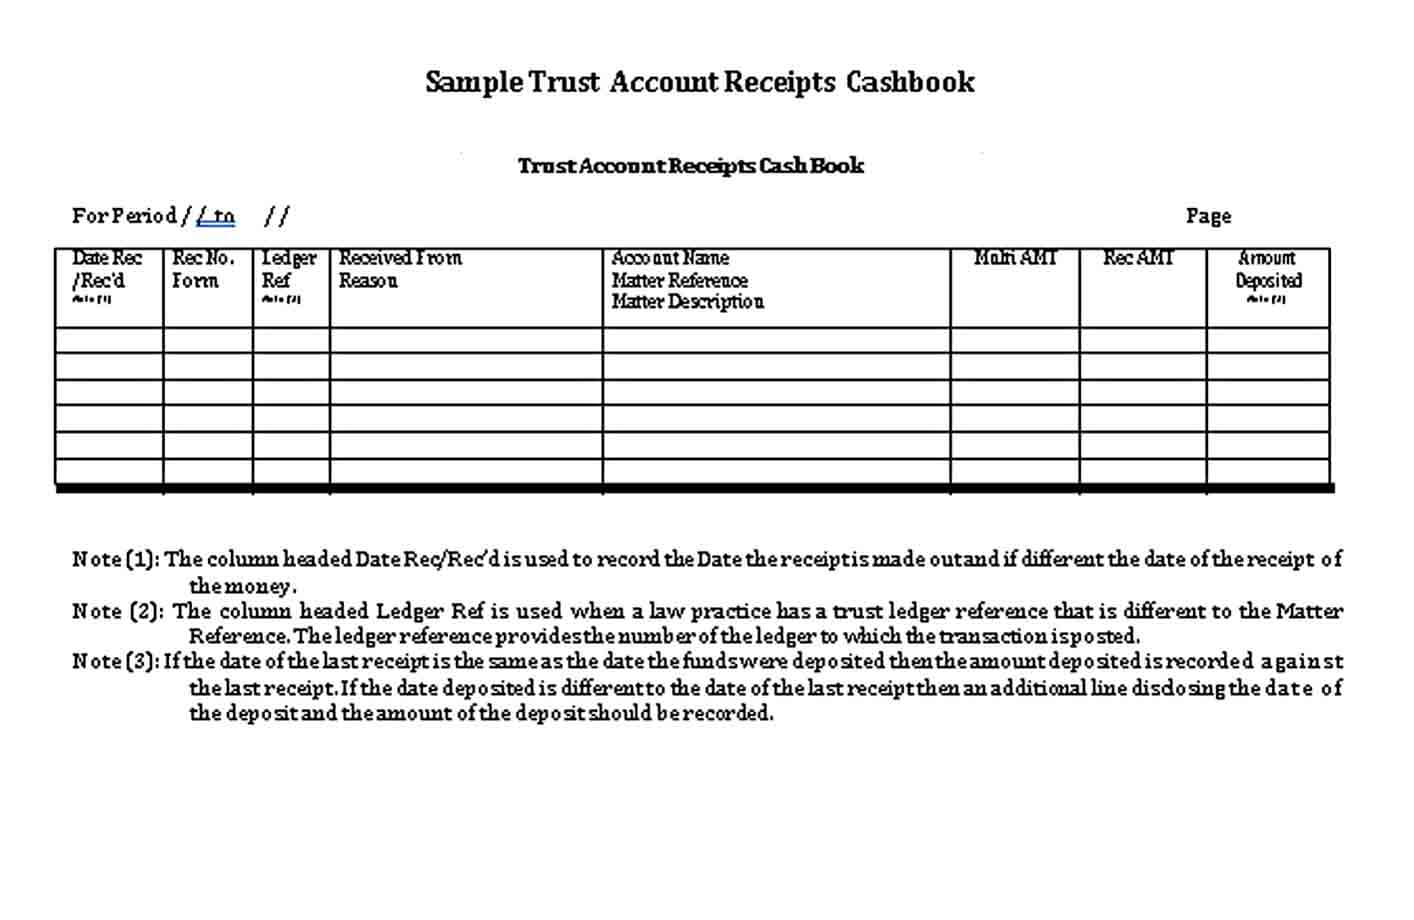 Trust Account Receipt Cash Book PDF Download